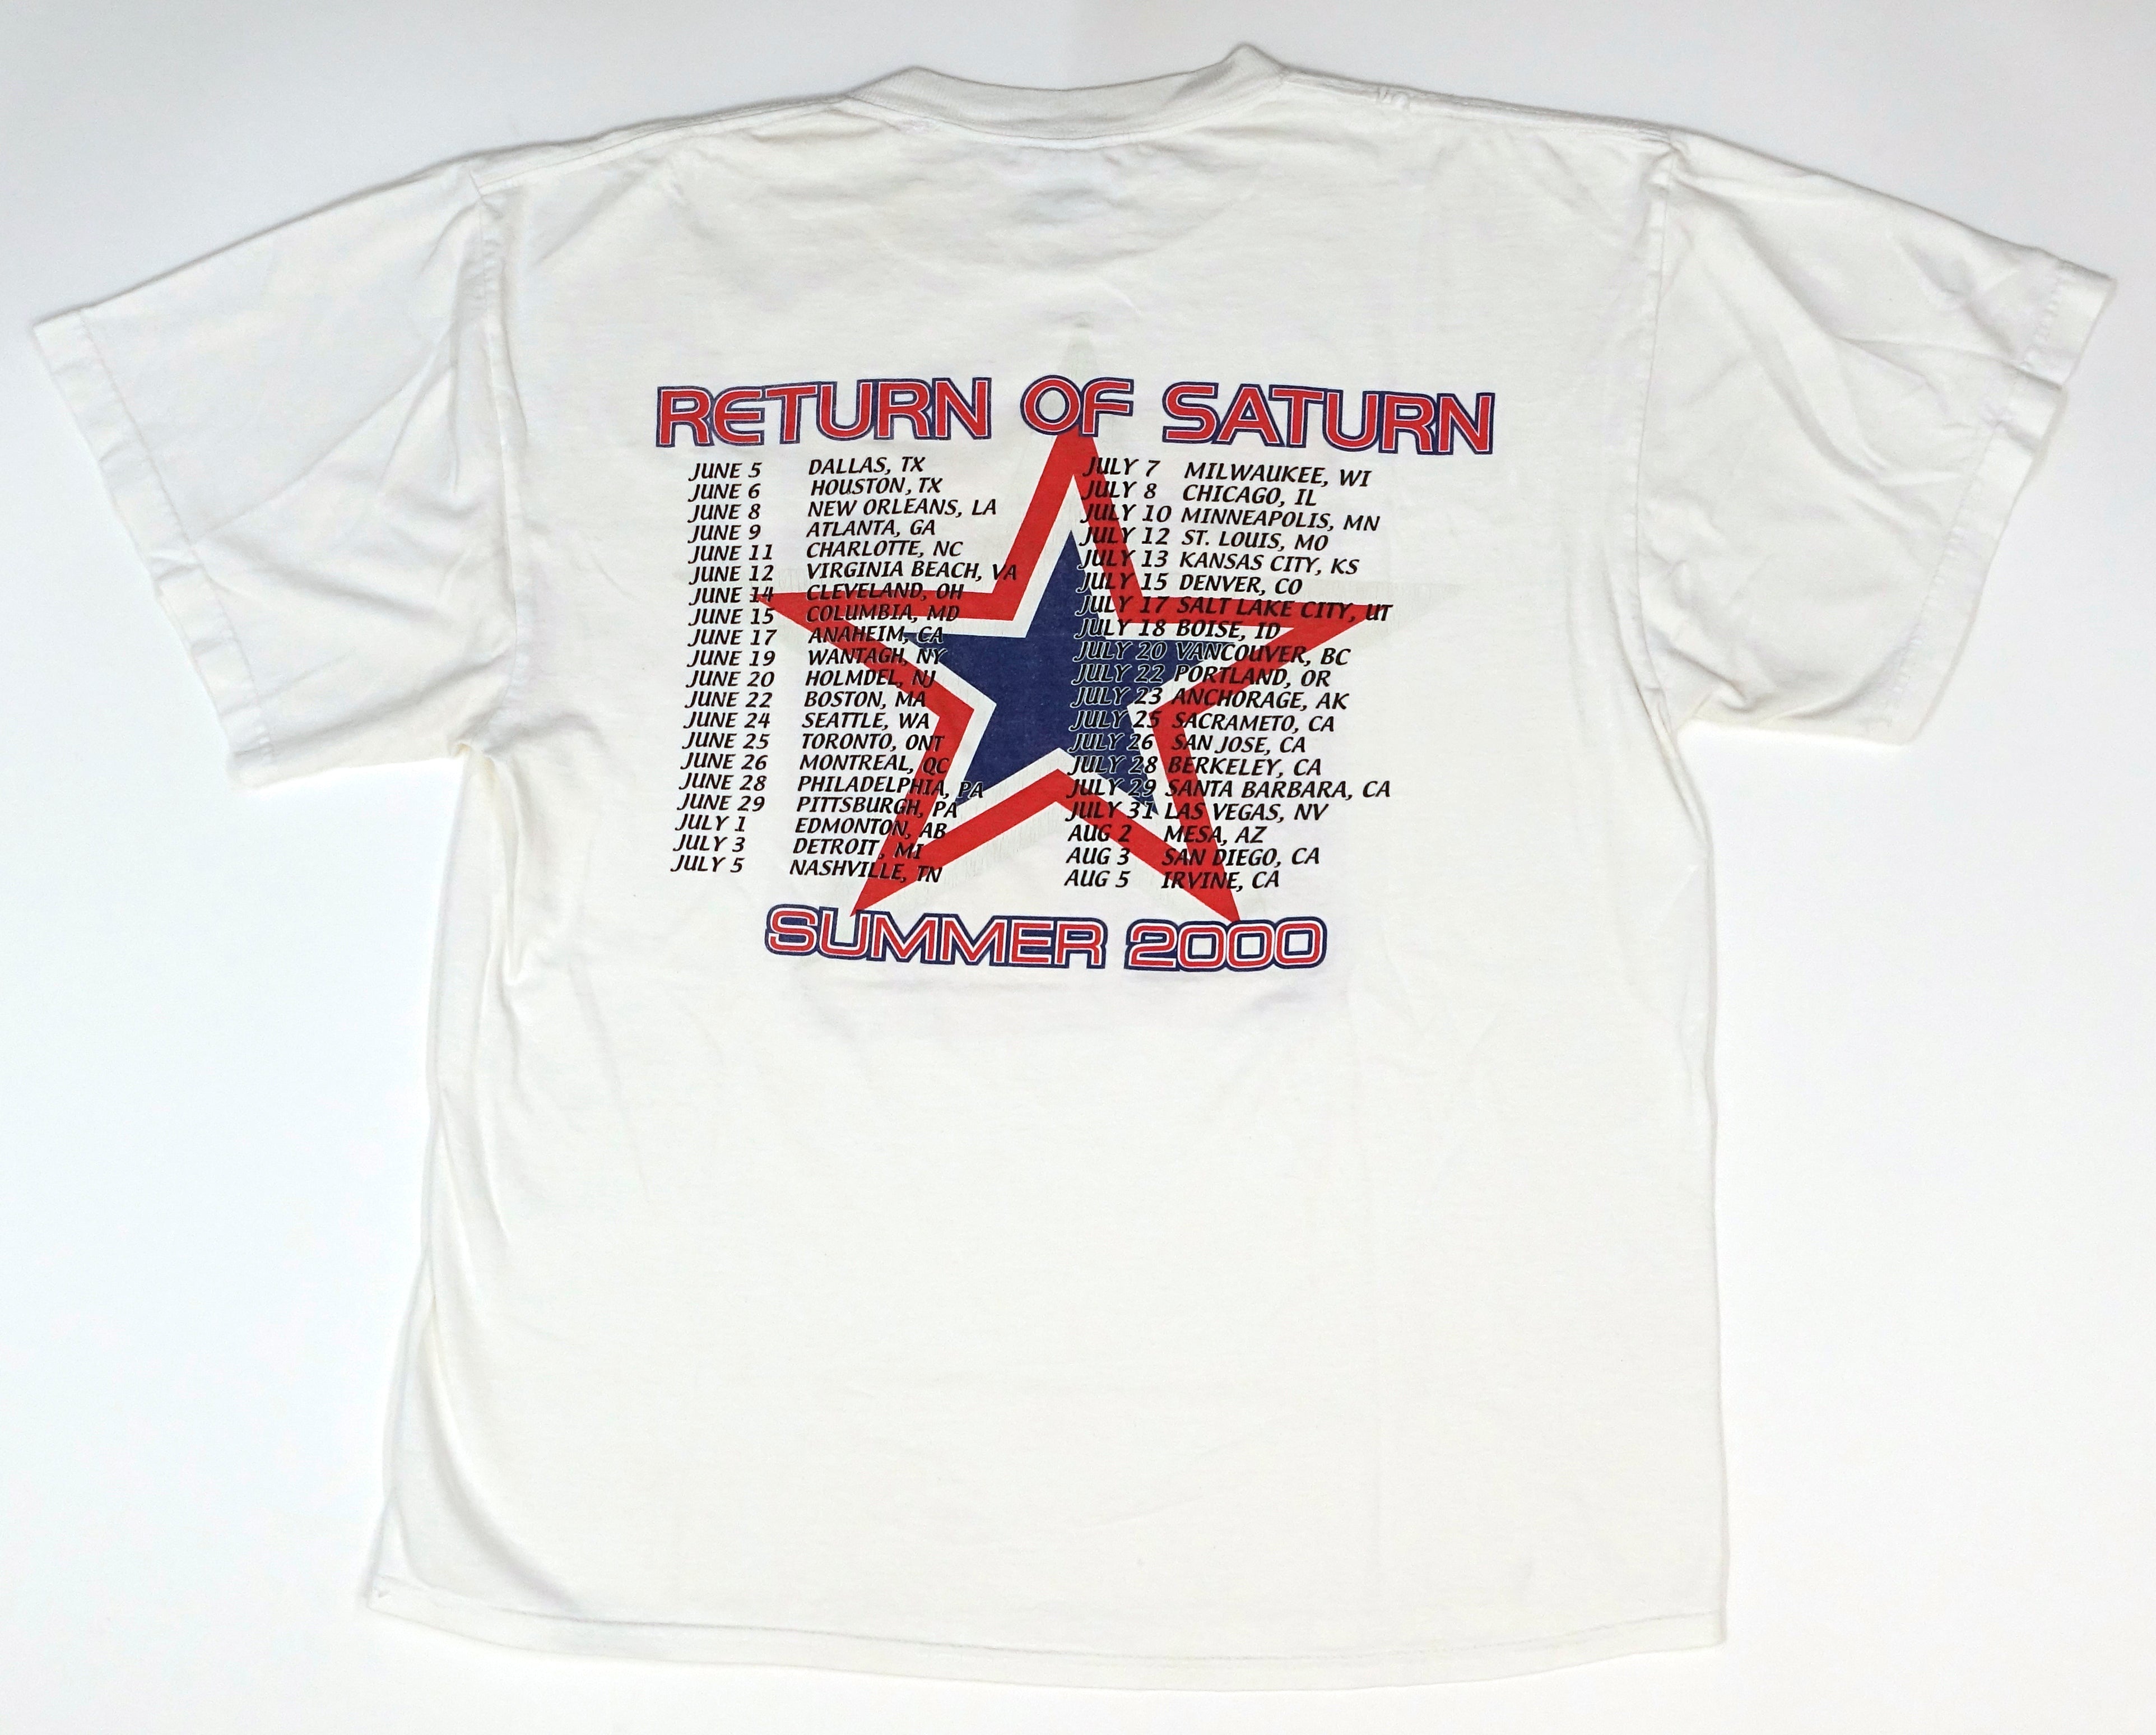 No Doubt - Return Of Saturn 2000 Tour Shirt Size Large